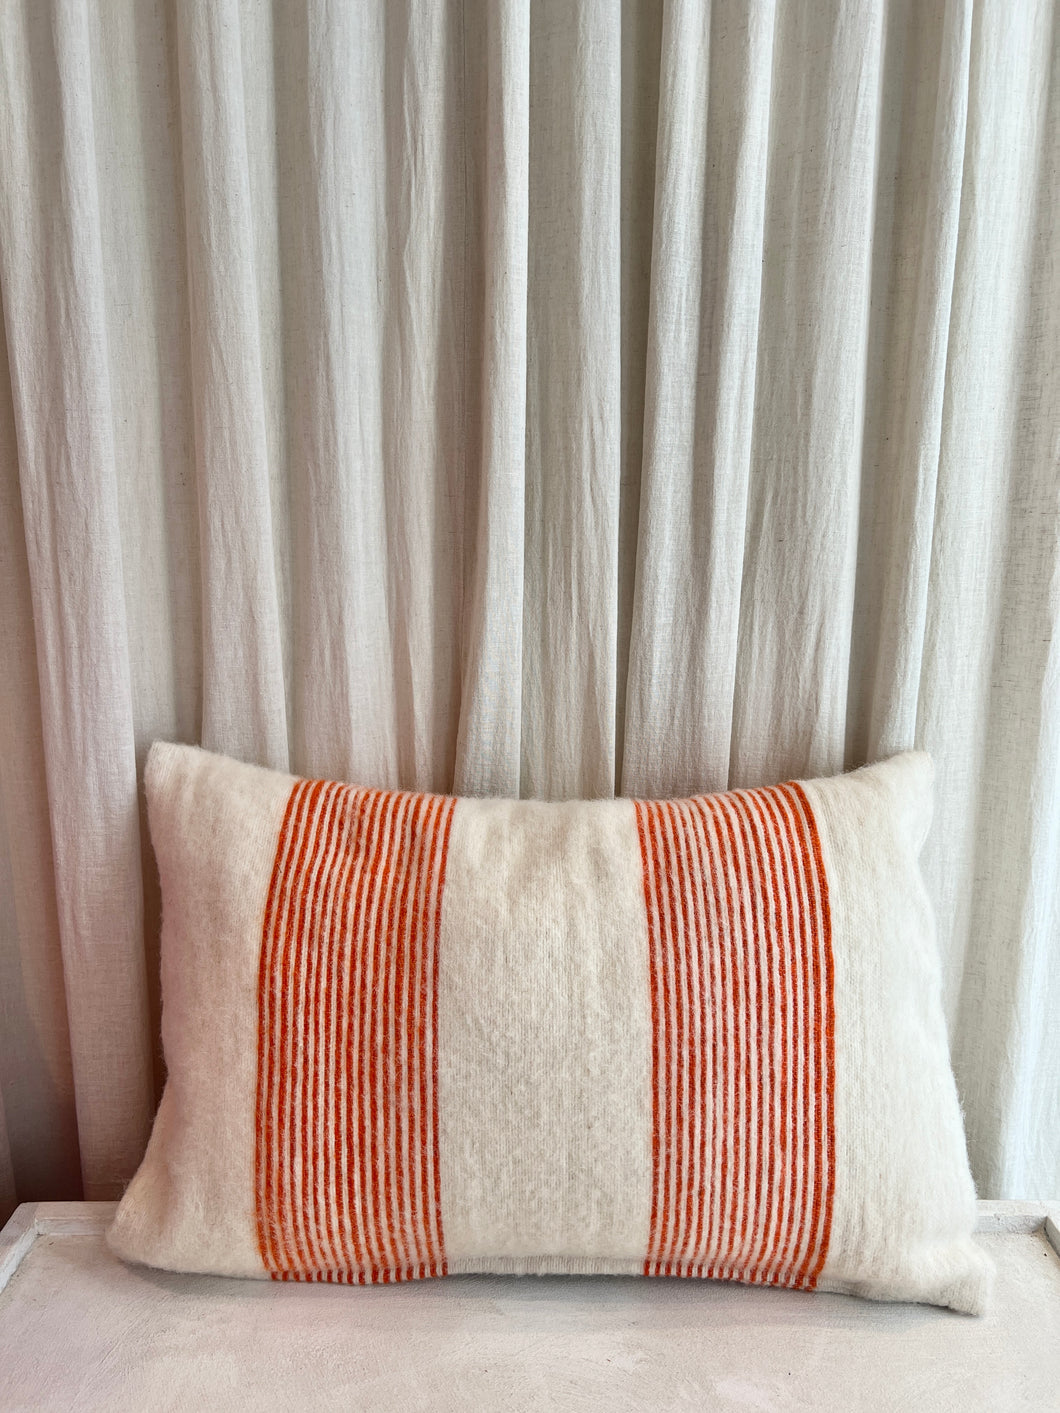 Household Hardware - Wool Pillow - Orange Stripes